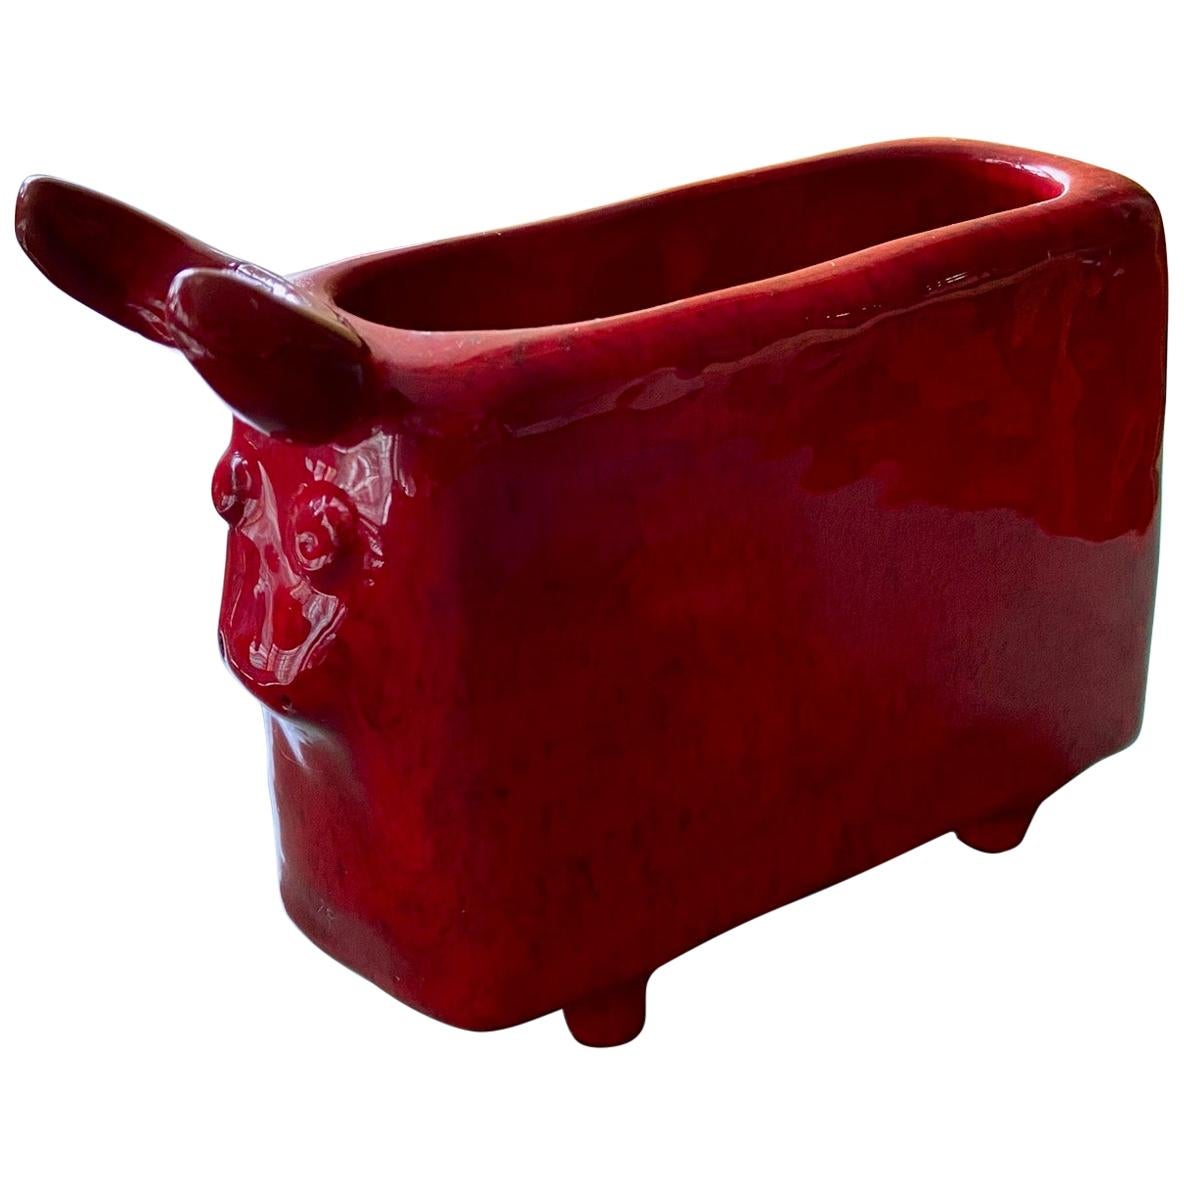 Red Enameled Ceramic Vase "Le Taureau", Cloutier Freres, circa 1950s, France